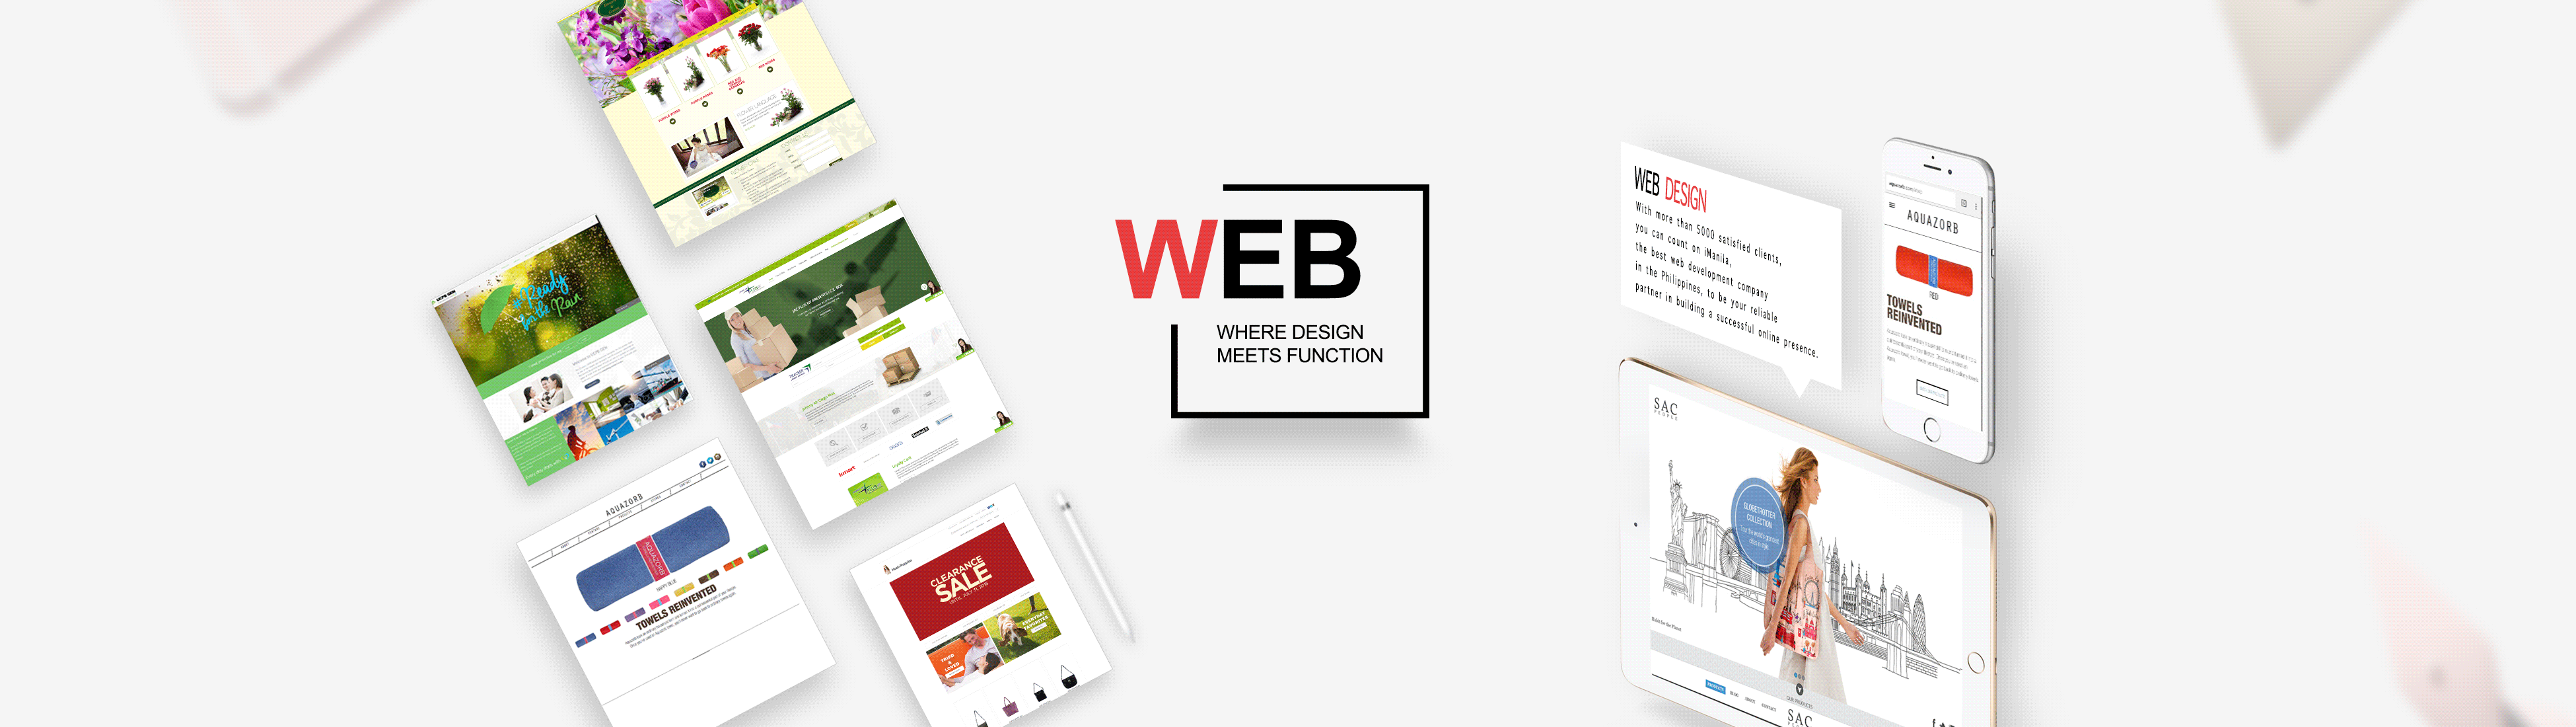 Best Web Design and Development Company